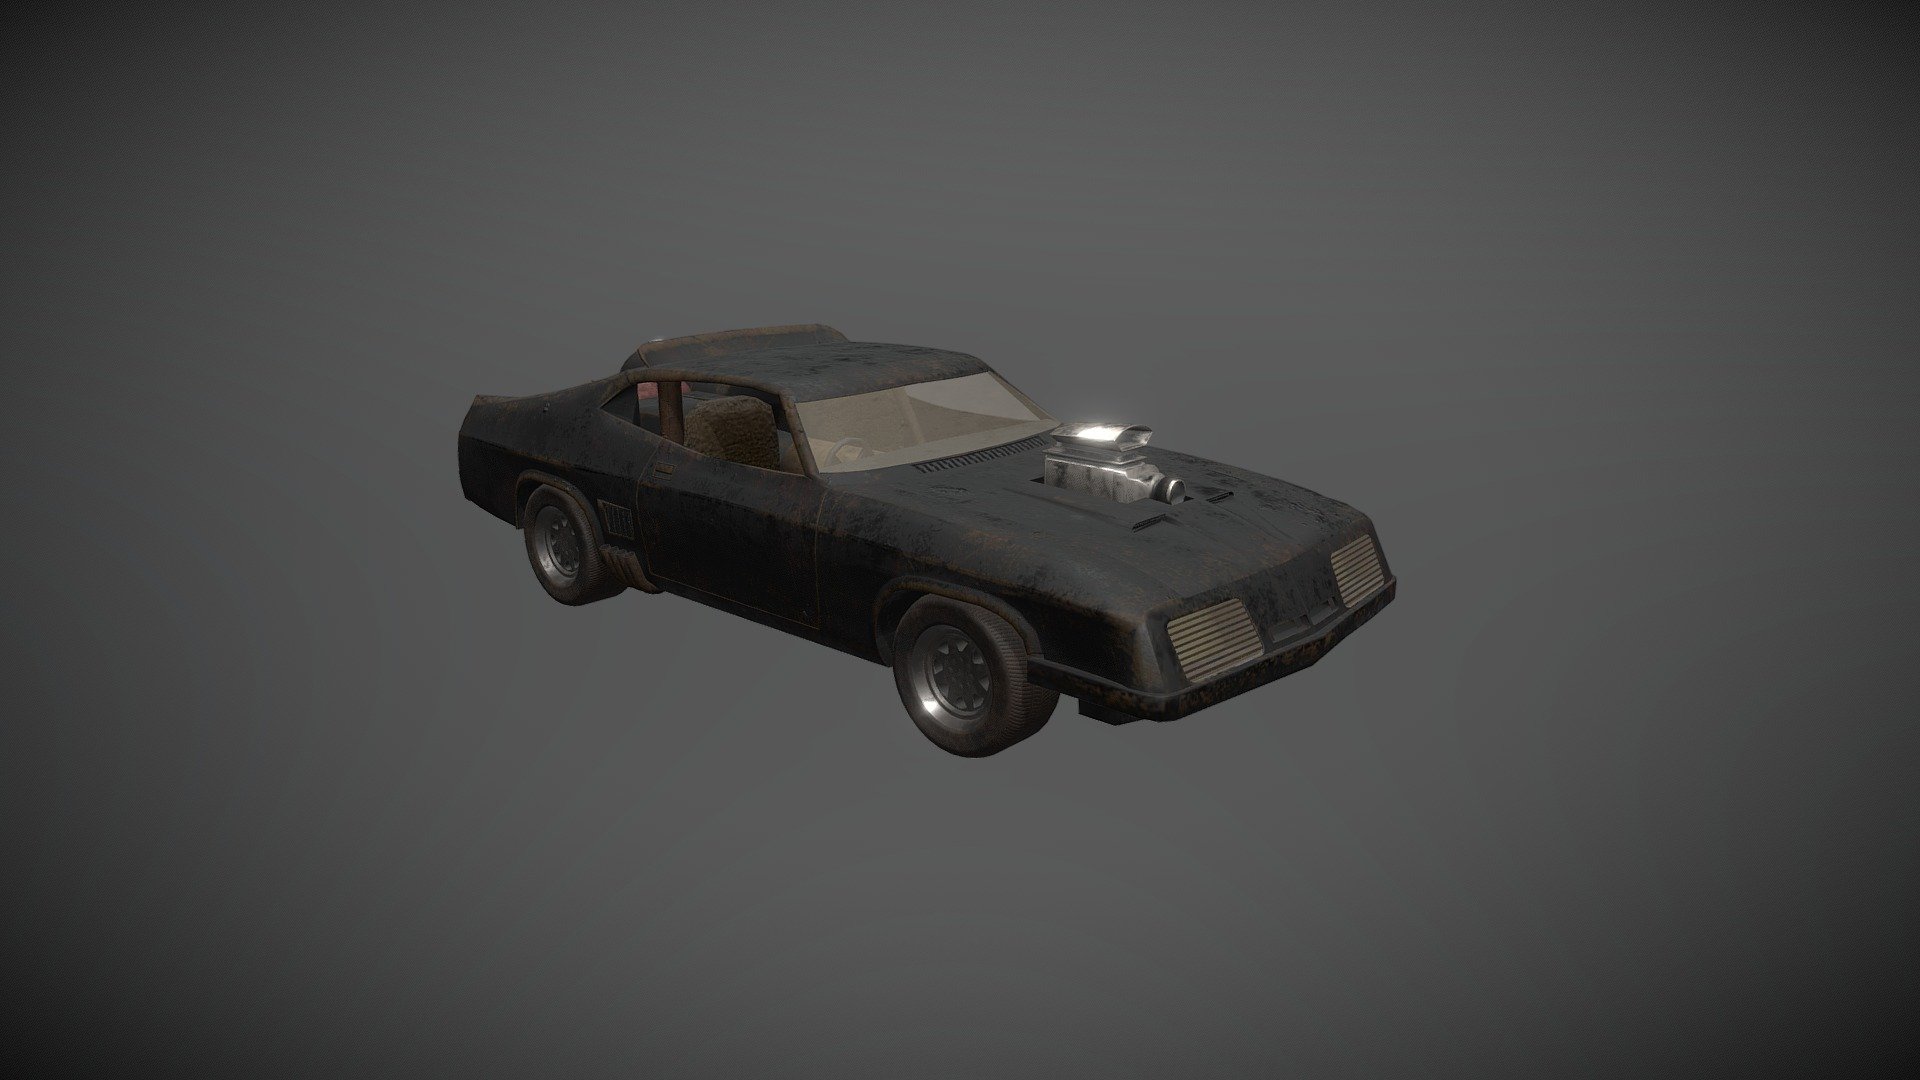 Interceptor - Mad Max's car